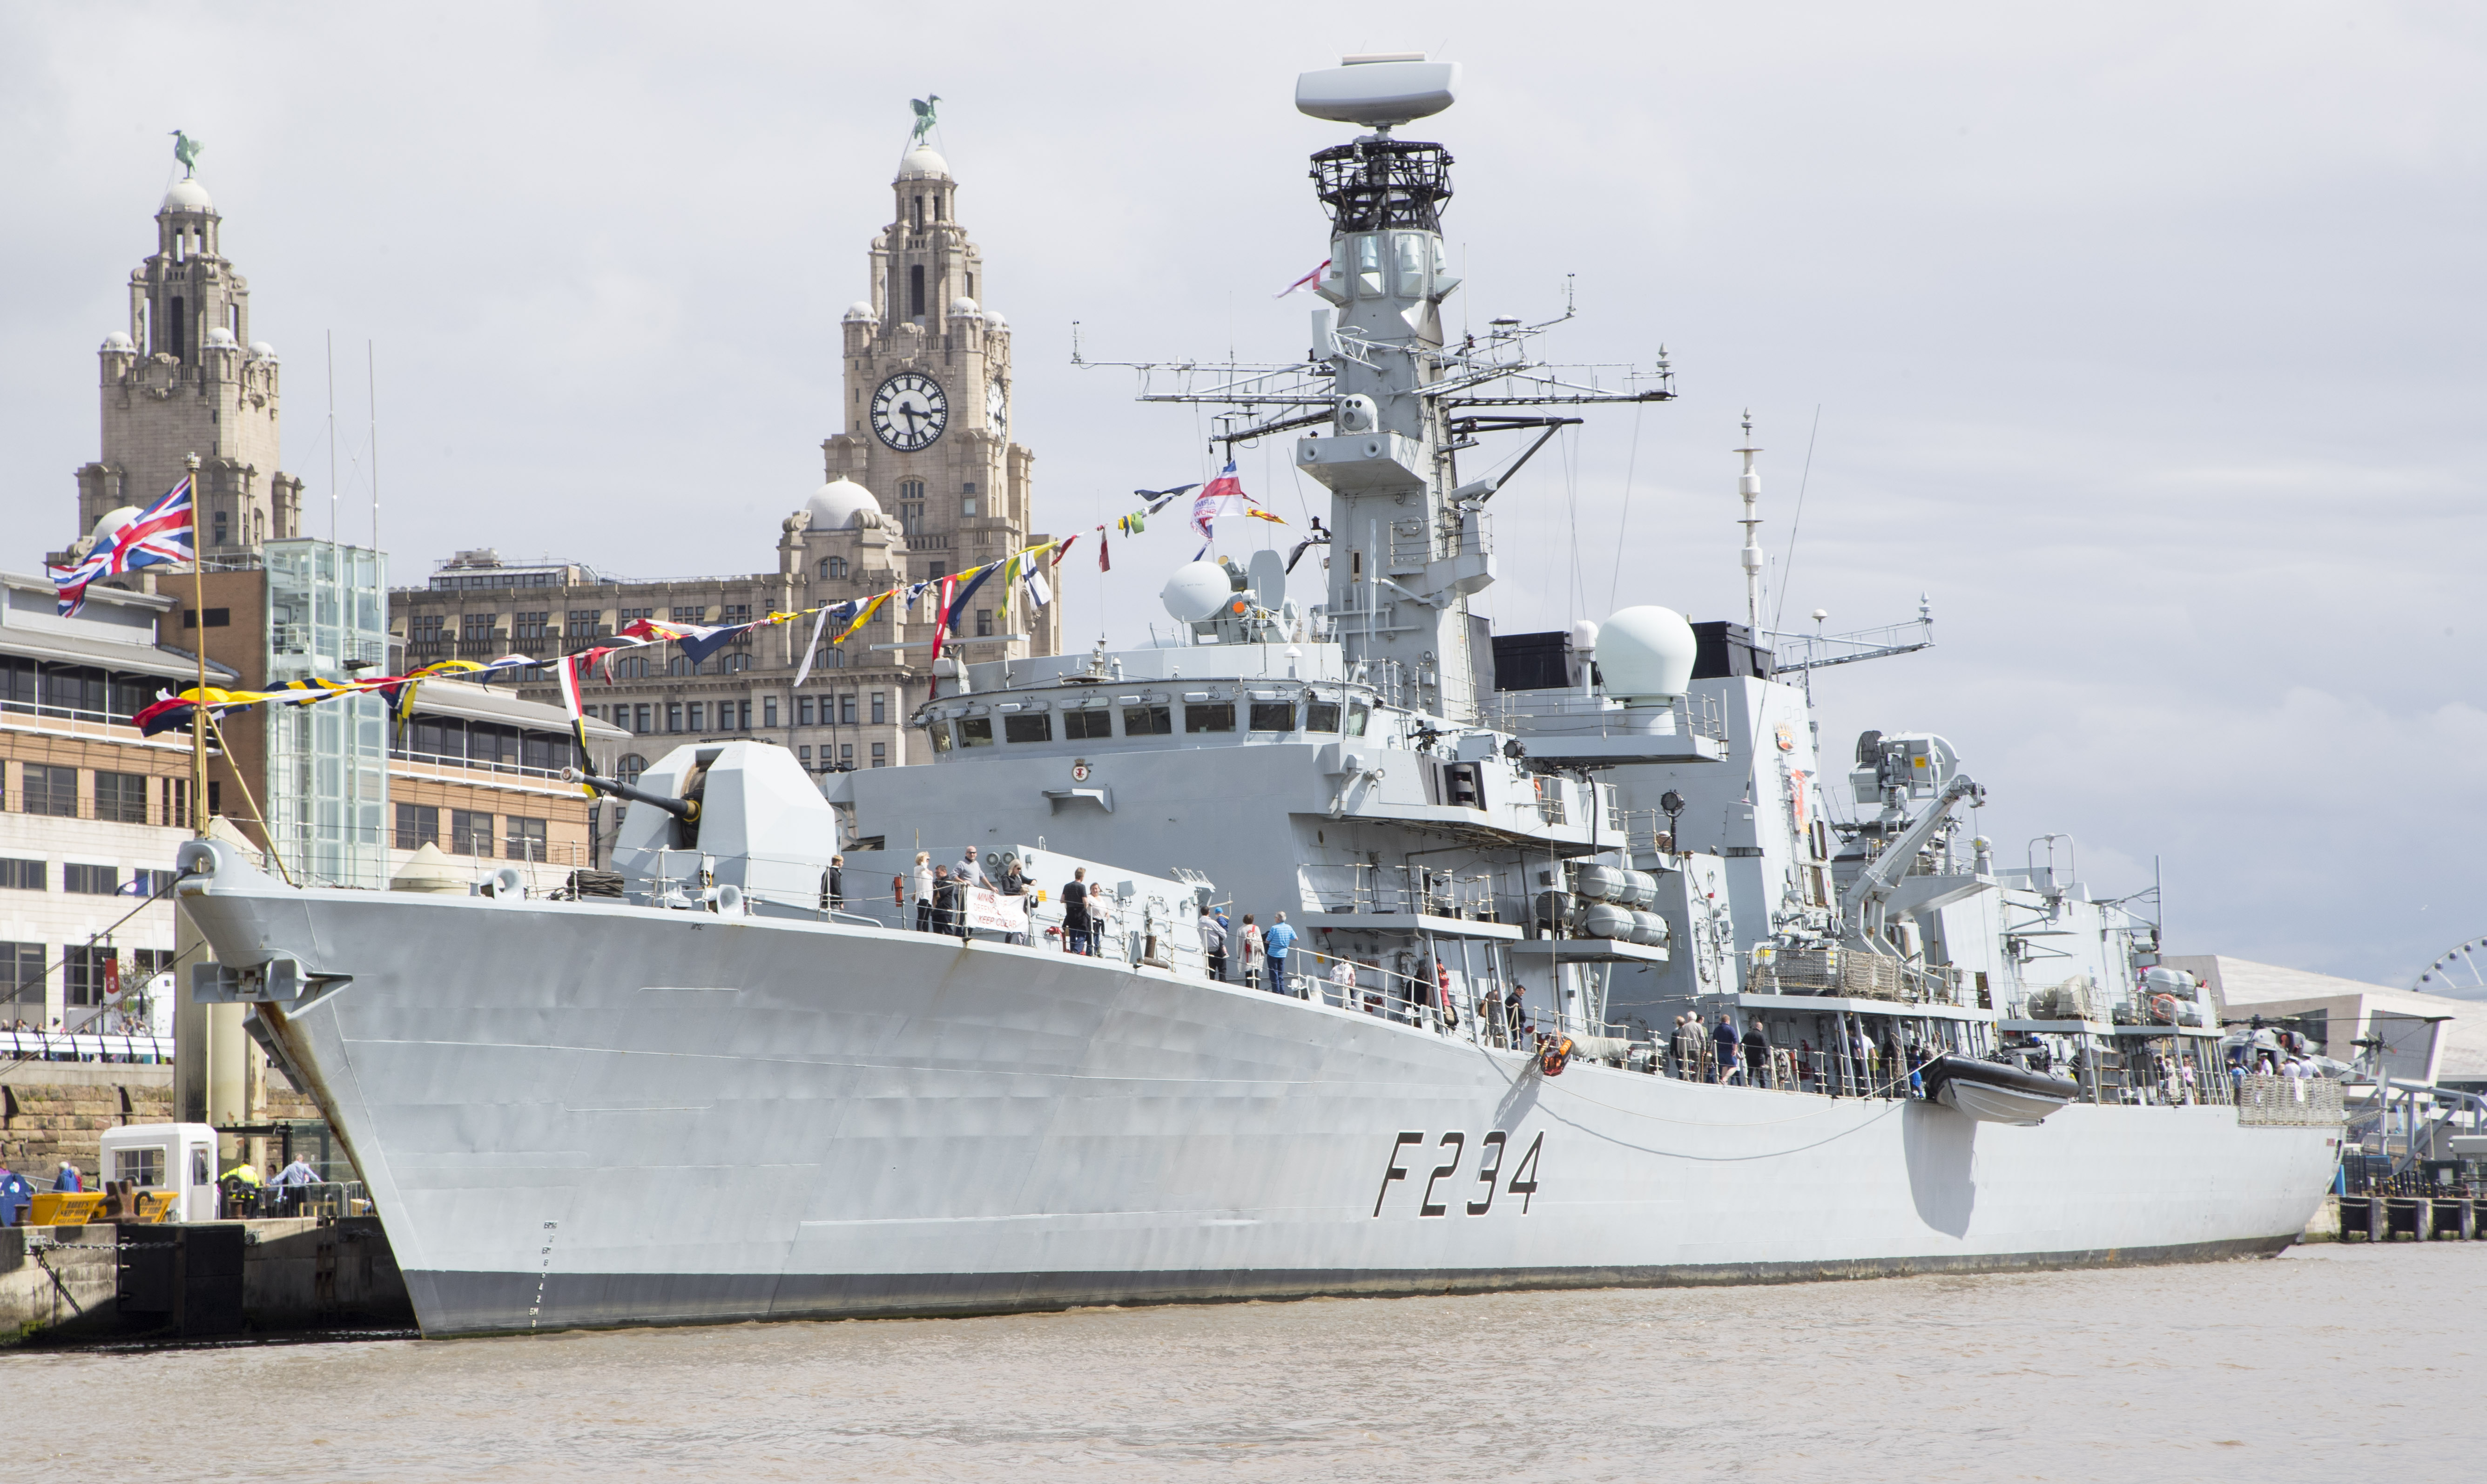 HMS Iron Duke at Liverpool